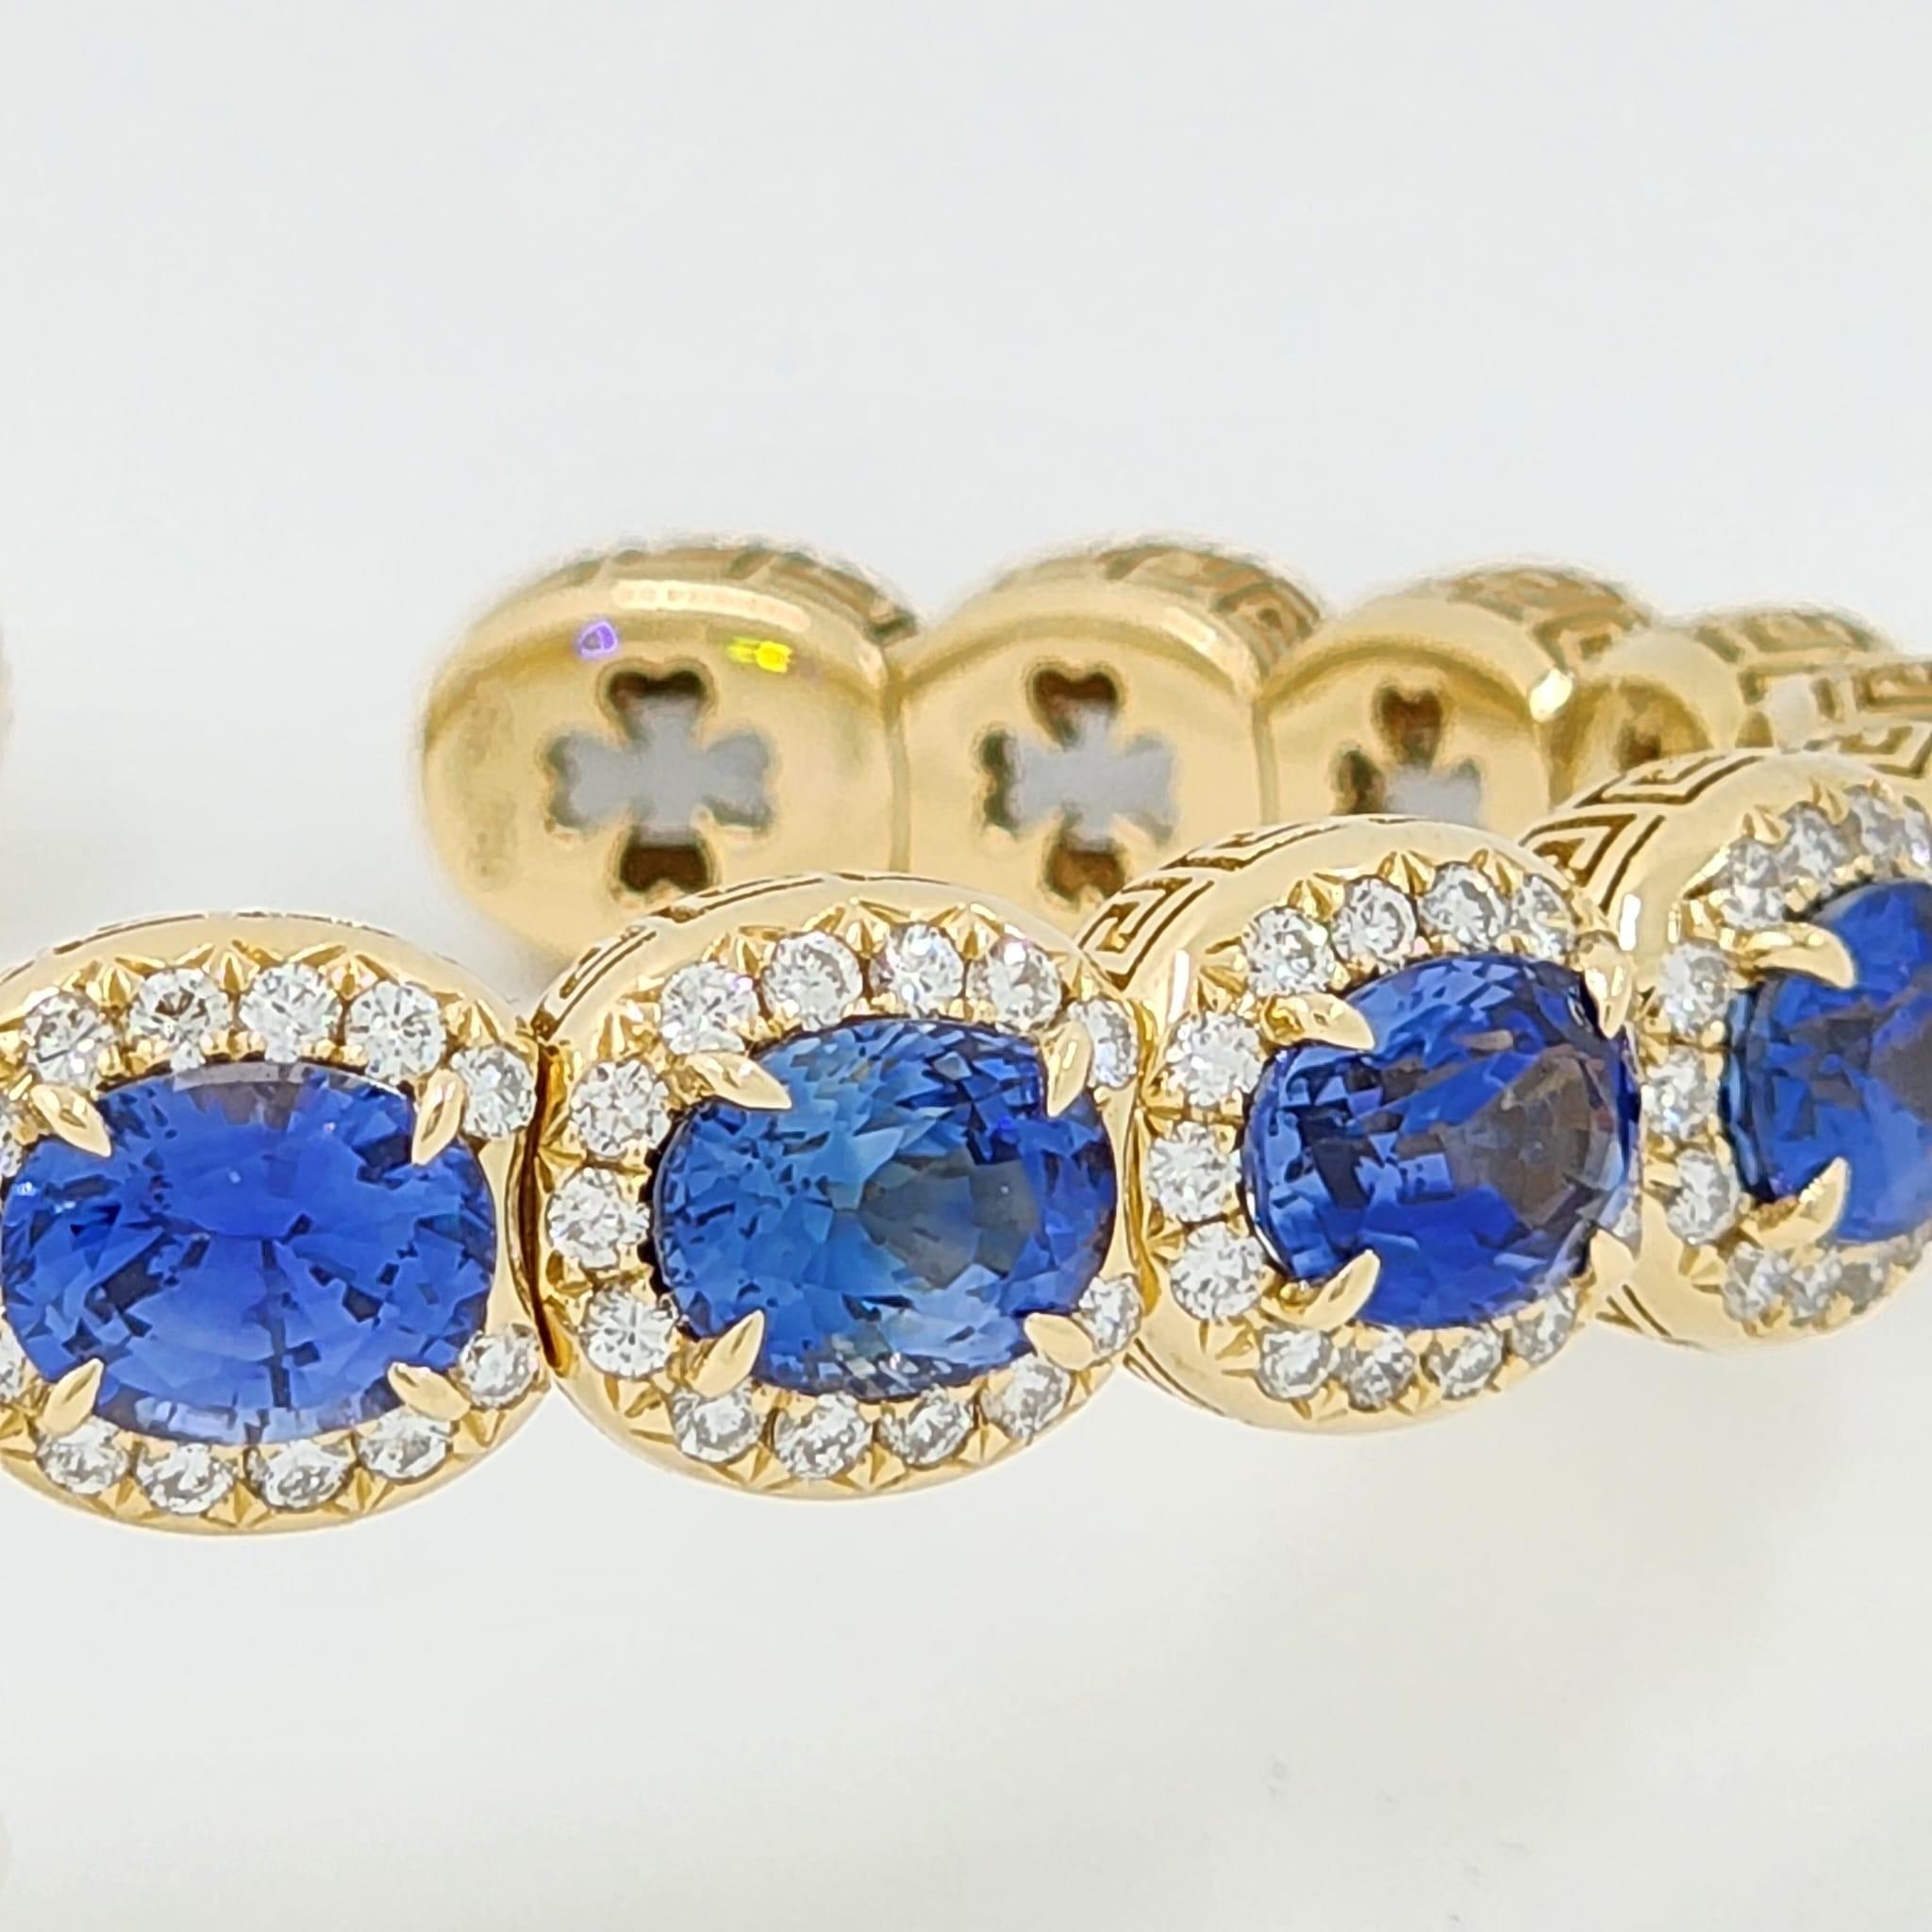 Oval Cut 9.49 Carats Blue Sapphire Diamond Bangle Bracelet in 18 Karat Yellow Gold For Sale